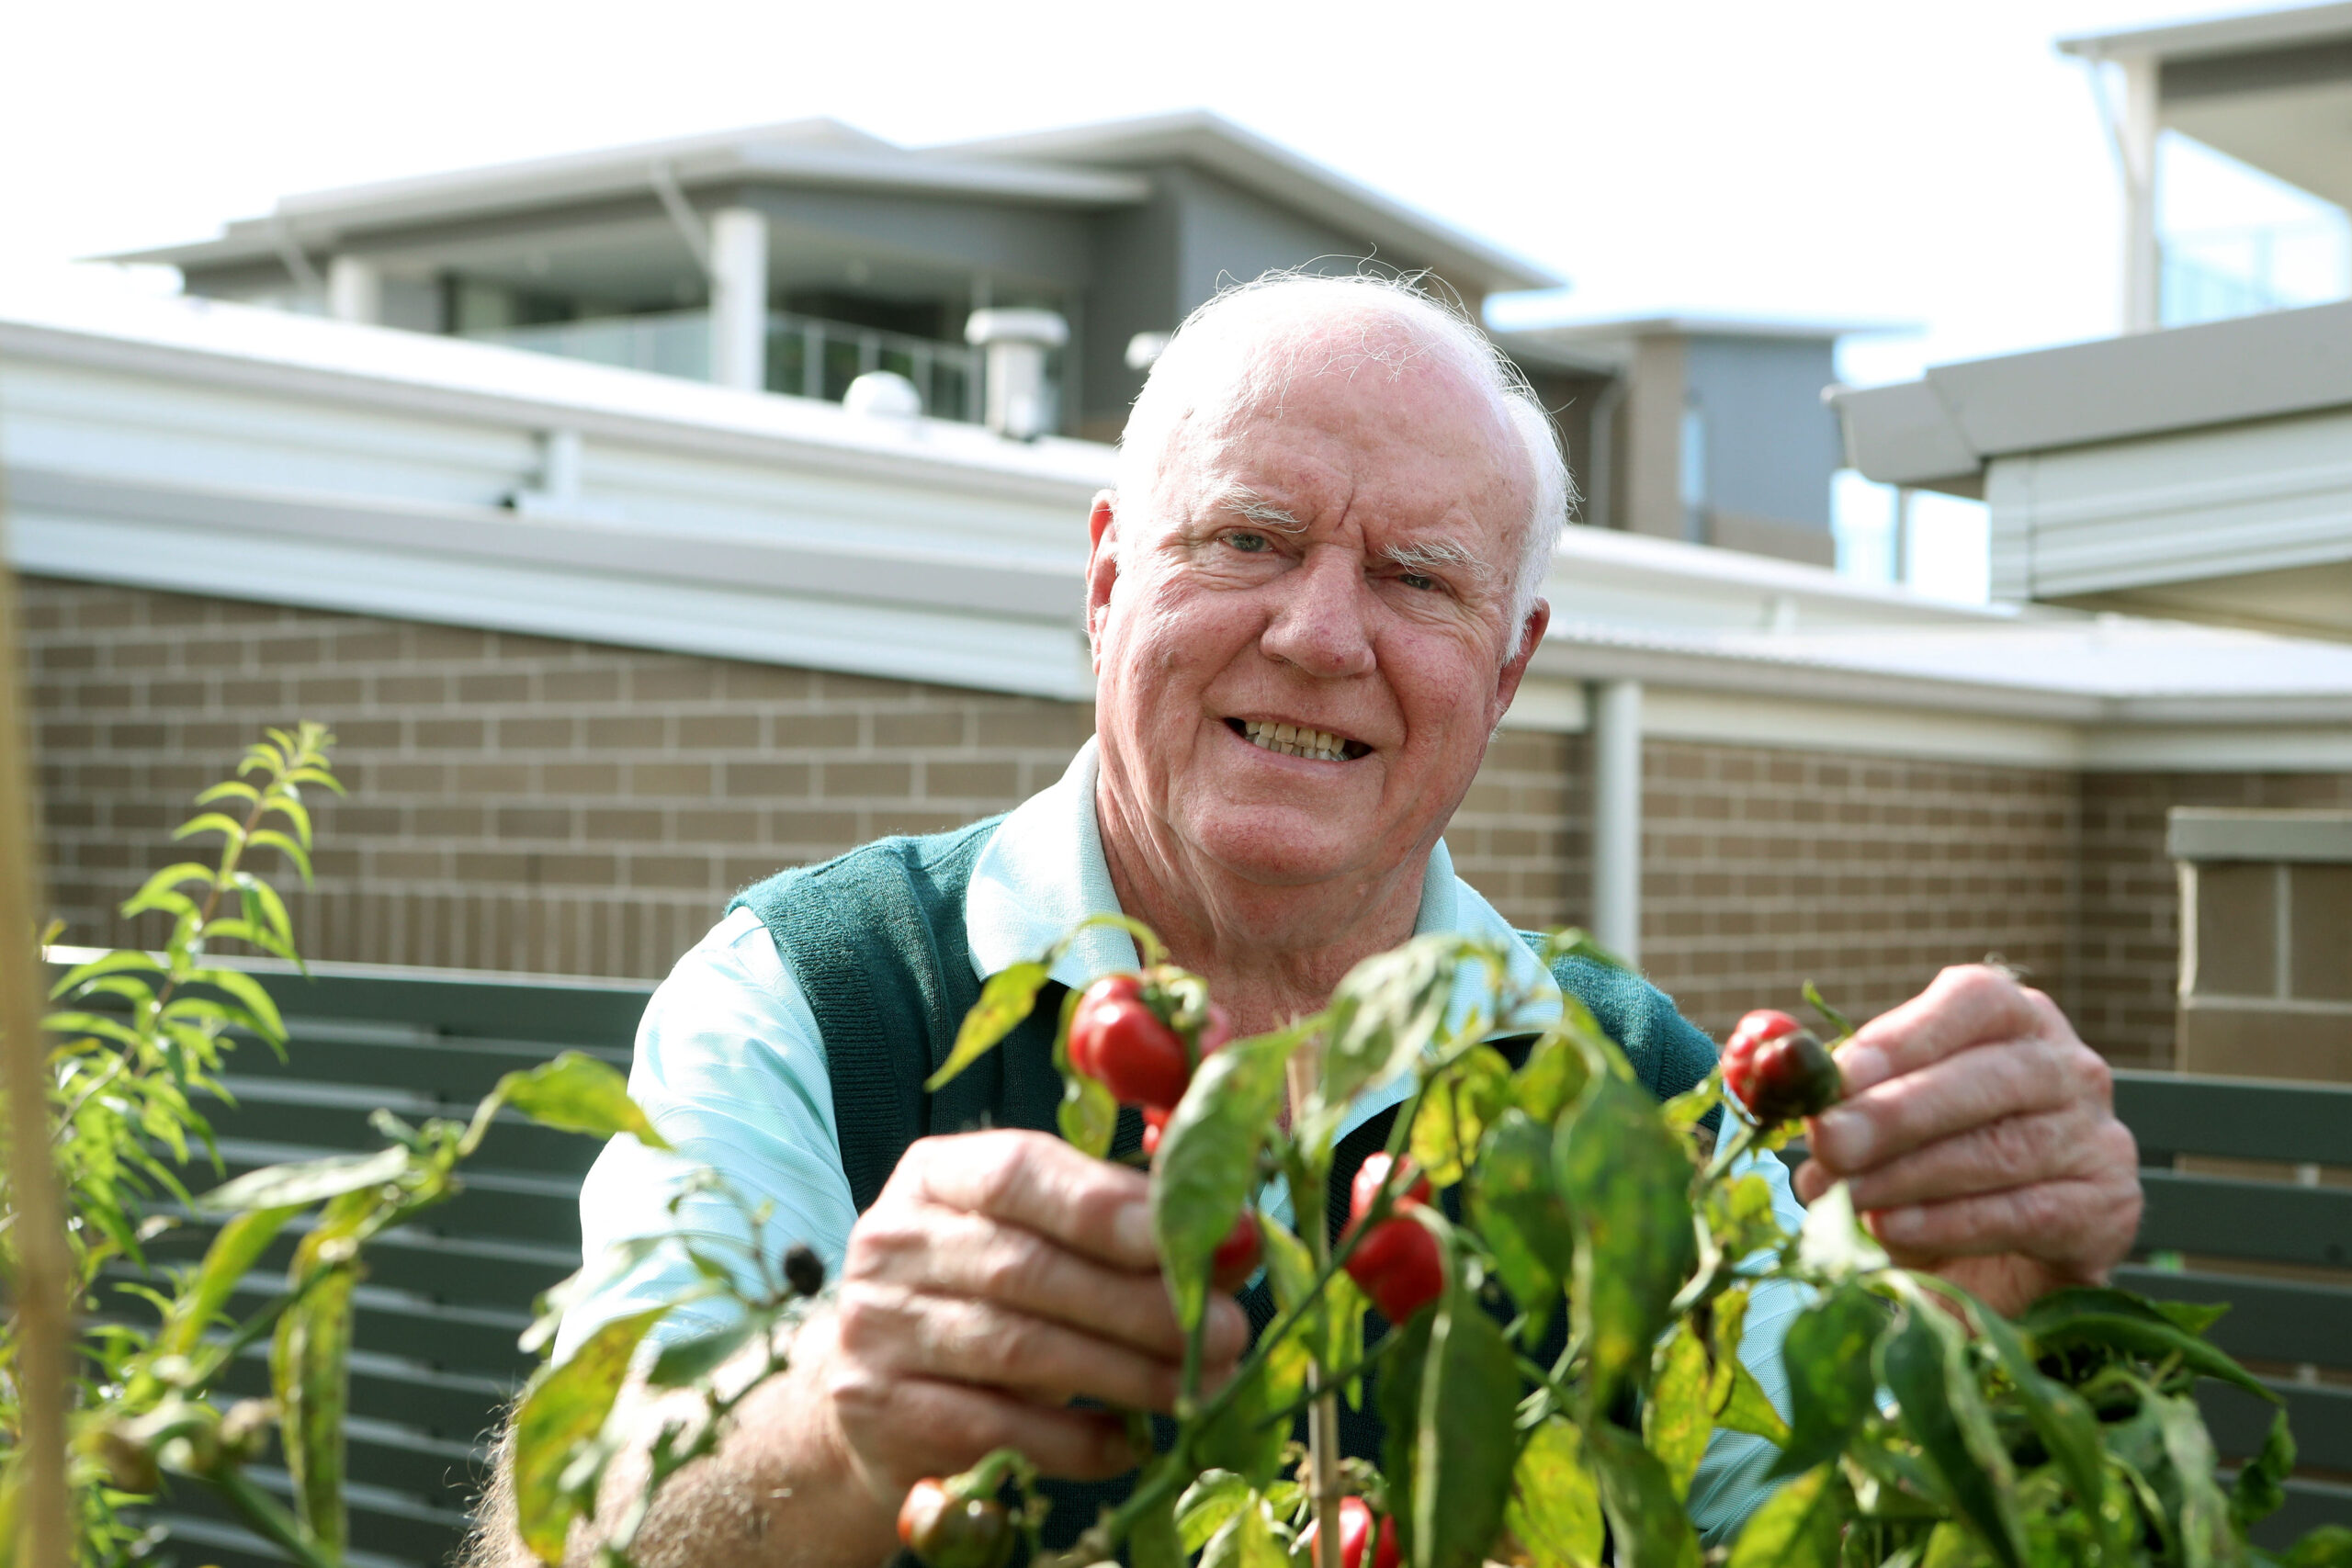 Warrigal resident enjoying therapeutic gardening, nurturing plants with care.